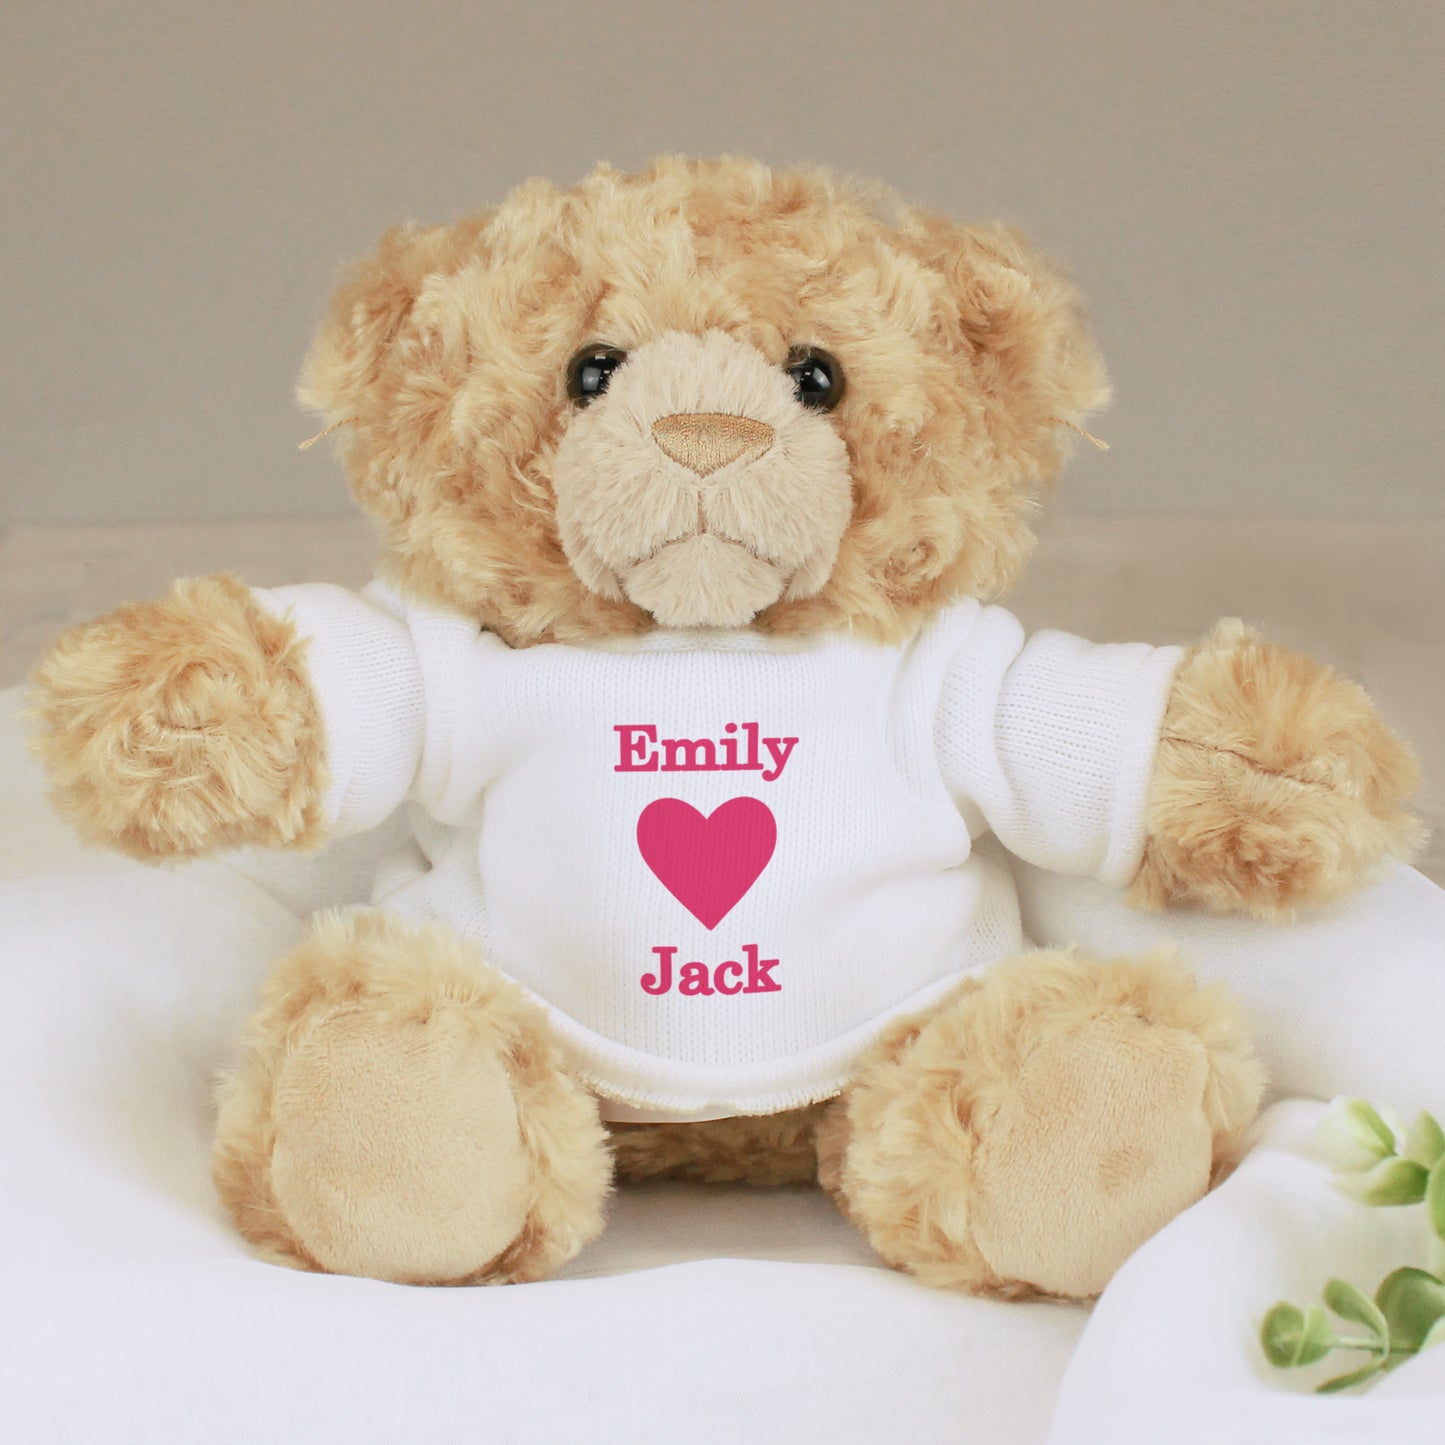 Personalised Love Heart Teddy Bear - Personalise It!